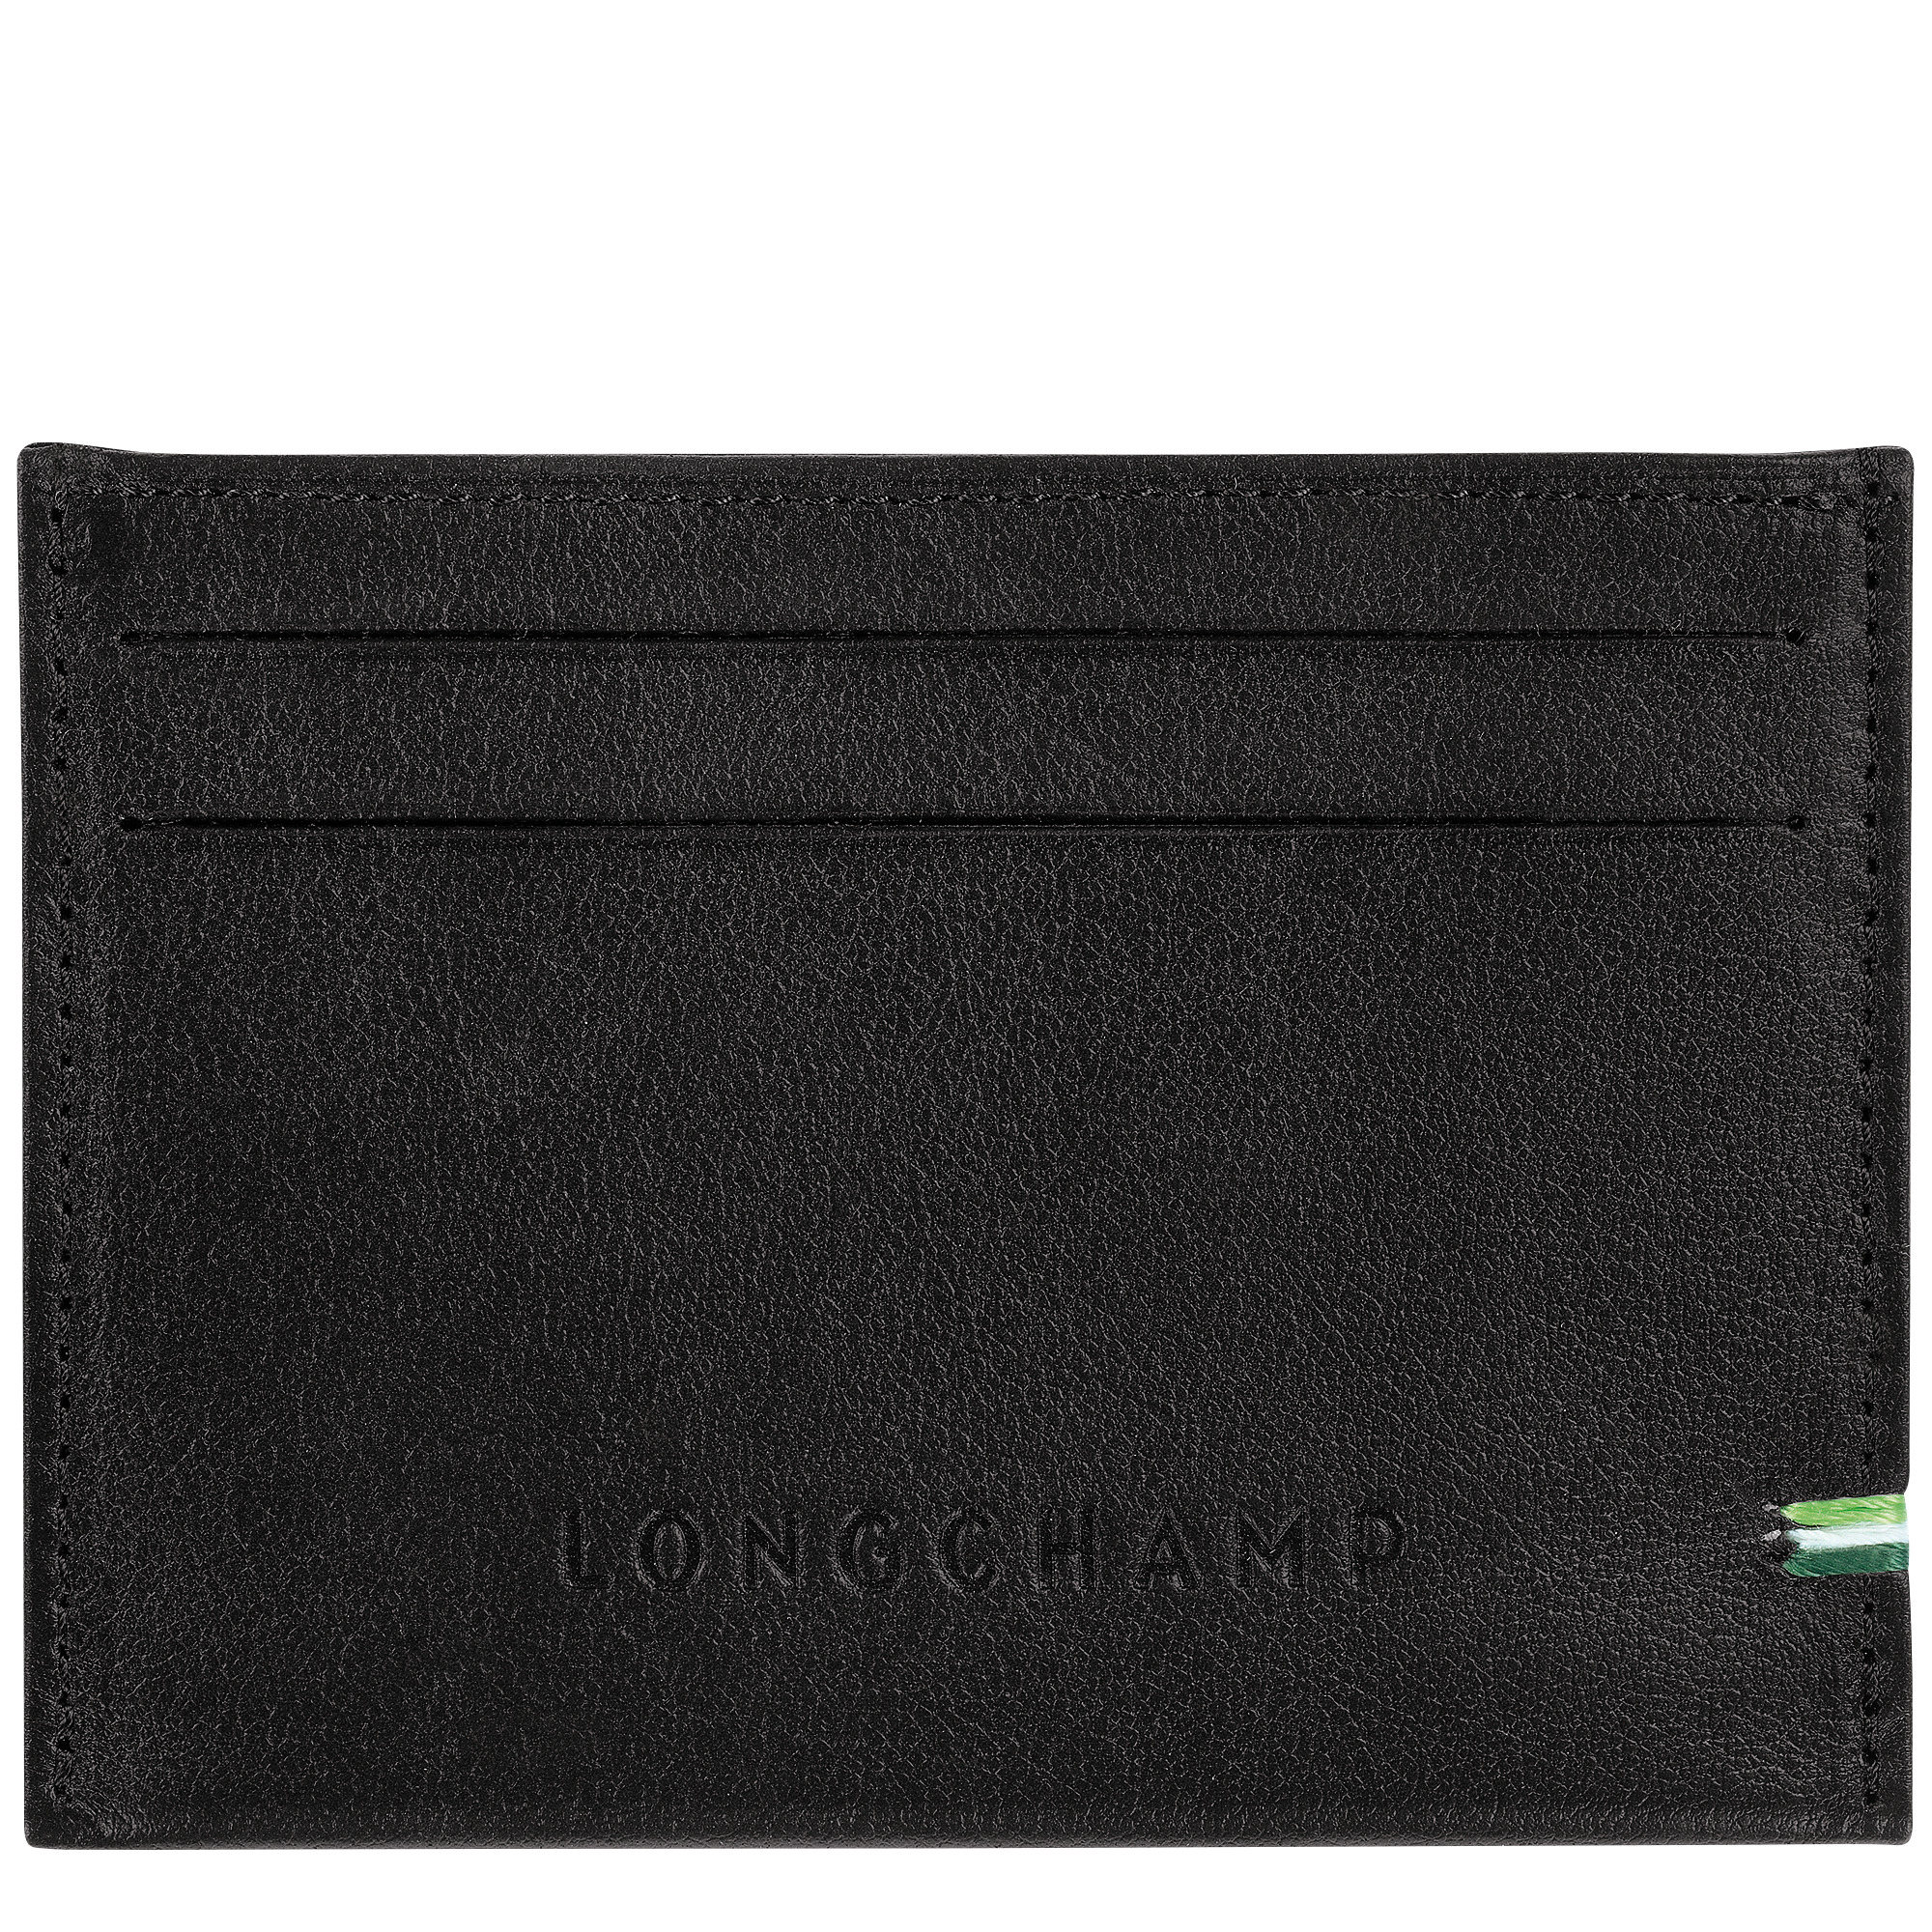 Longchamp sur Seine Card holder Black - Leather - 1